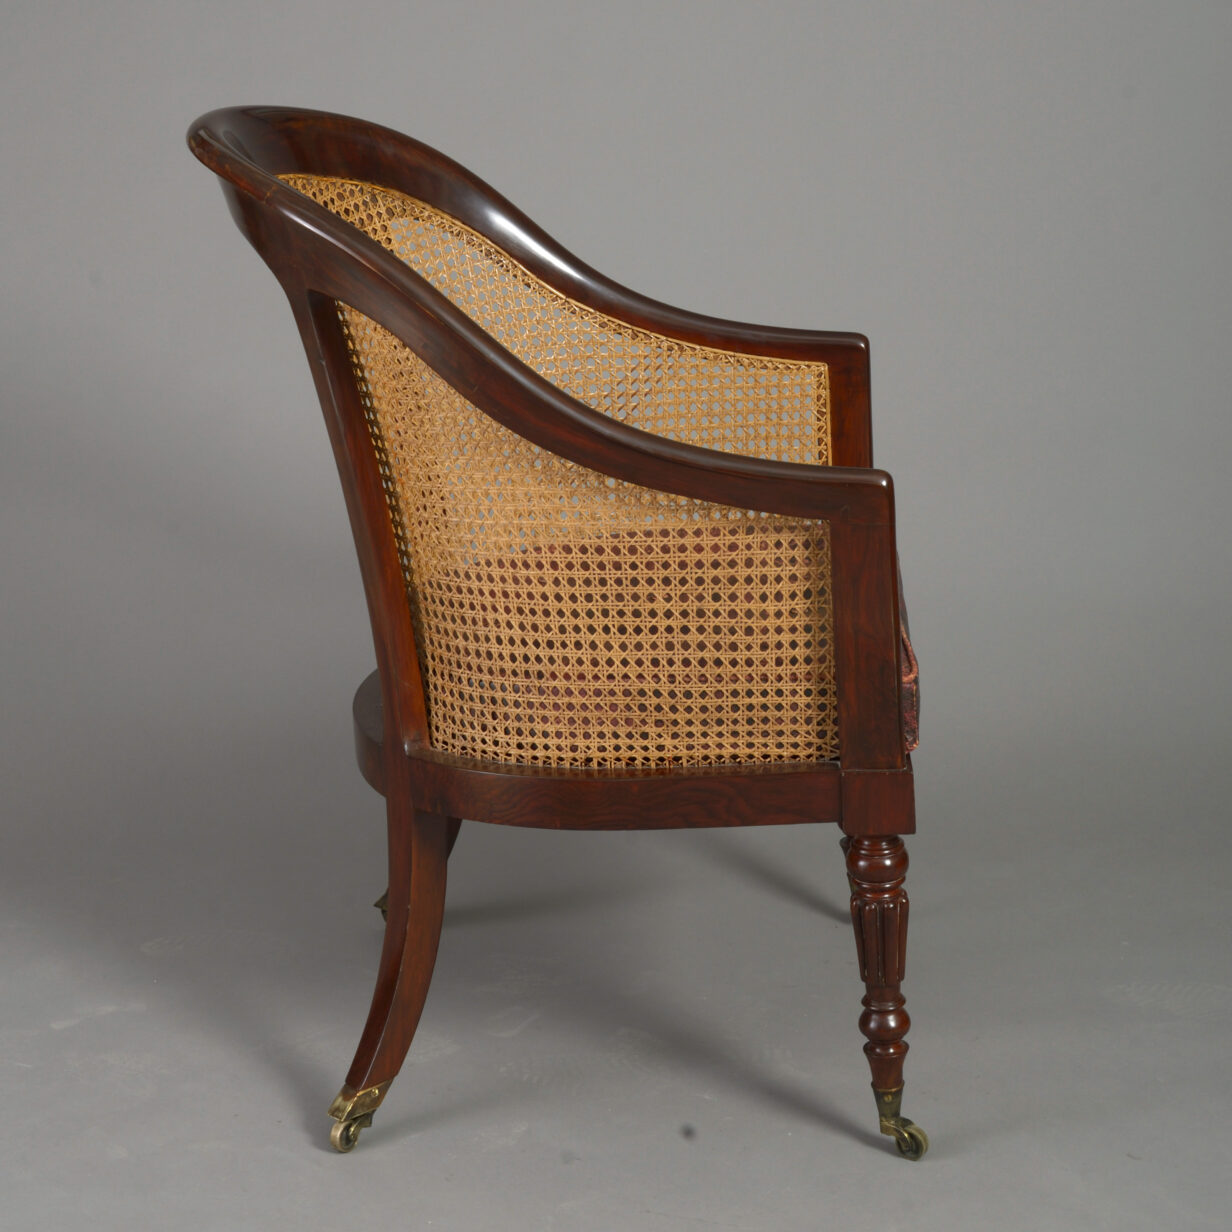 Early 19th century regency period rosewood bergère armchair